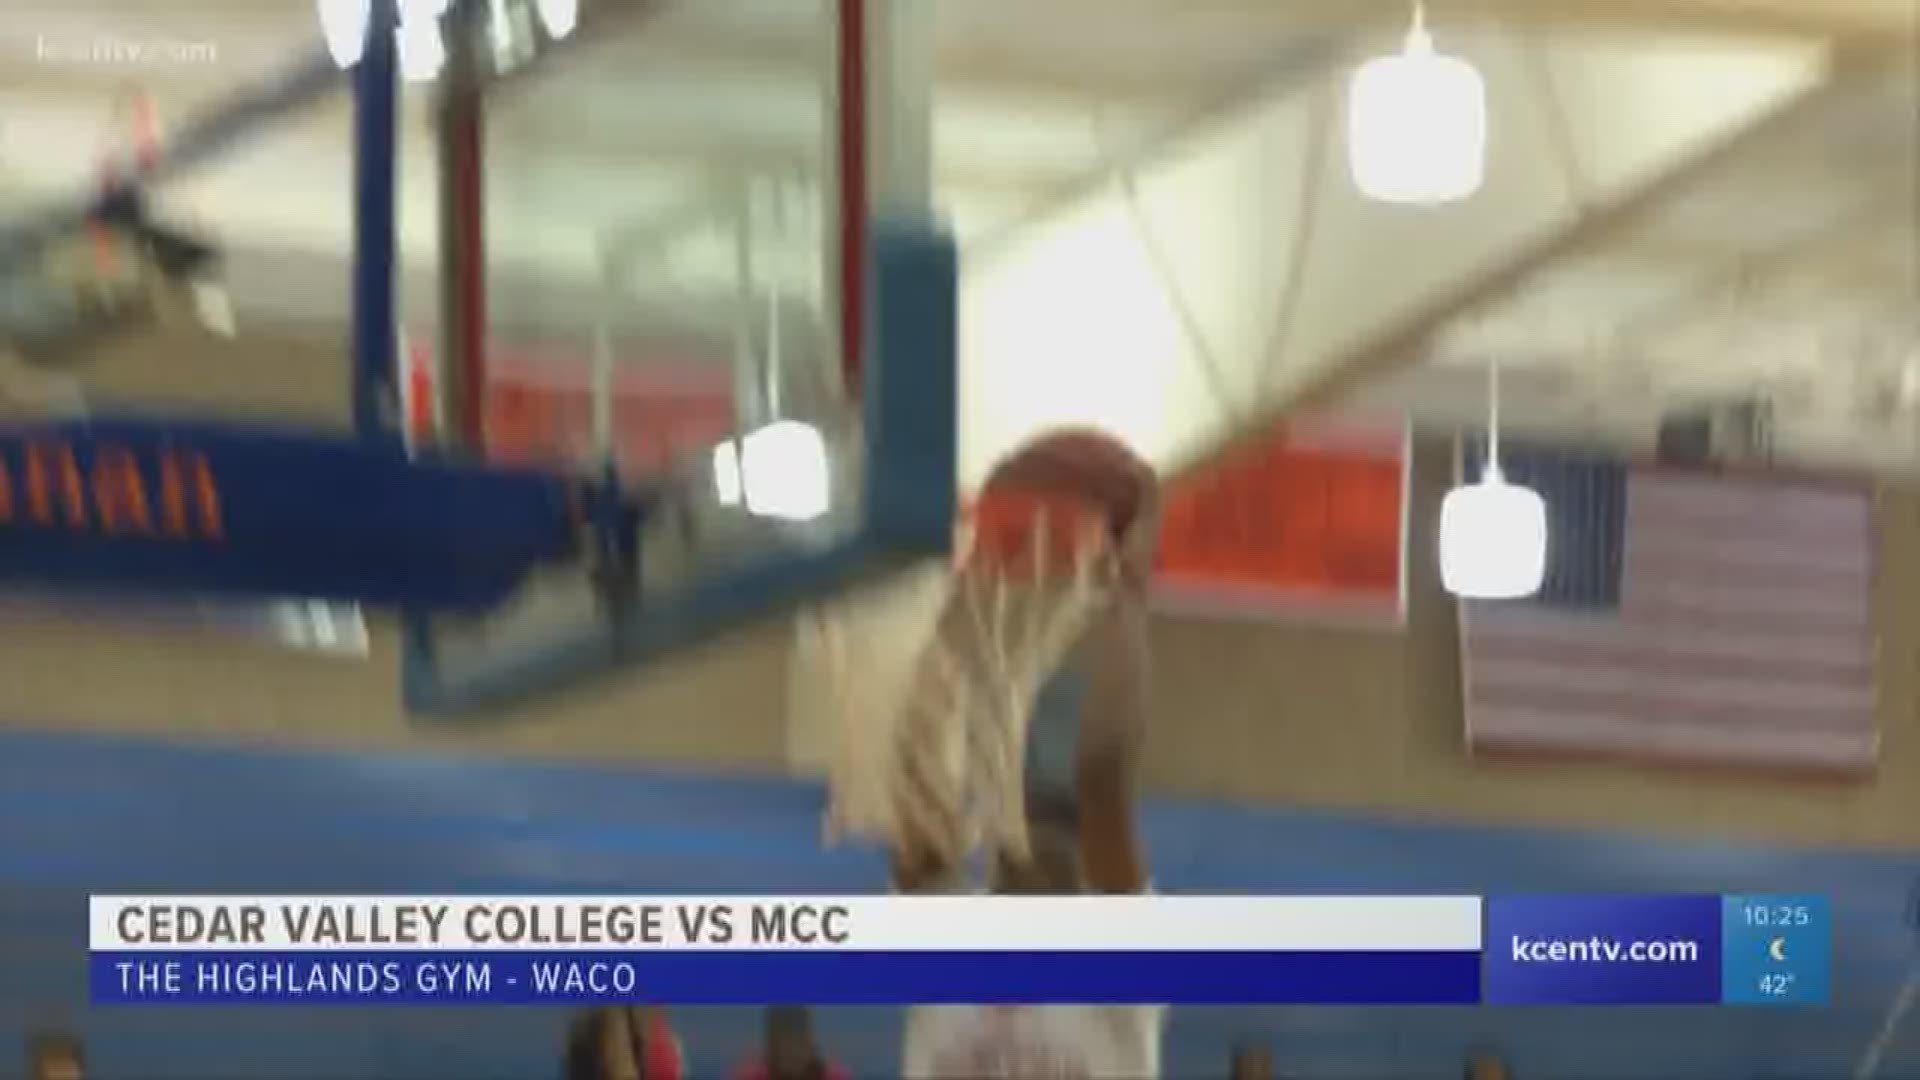 MCC rolled Cedar Valley College, 80-61.